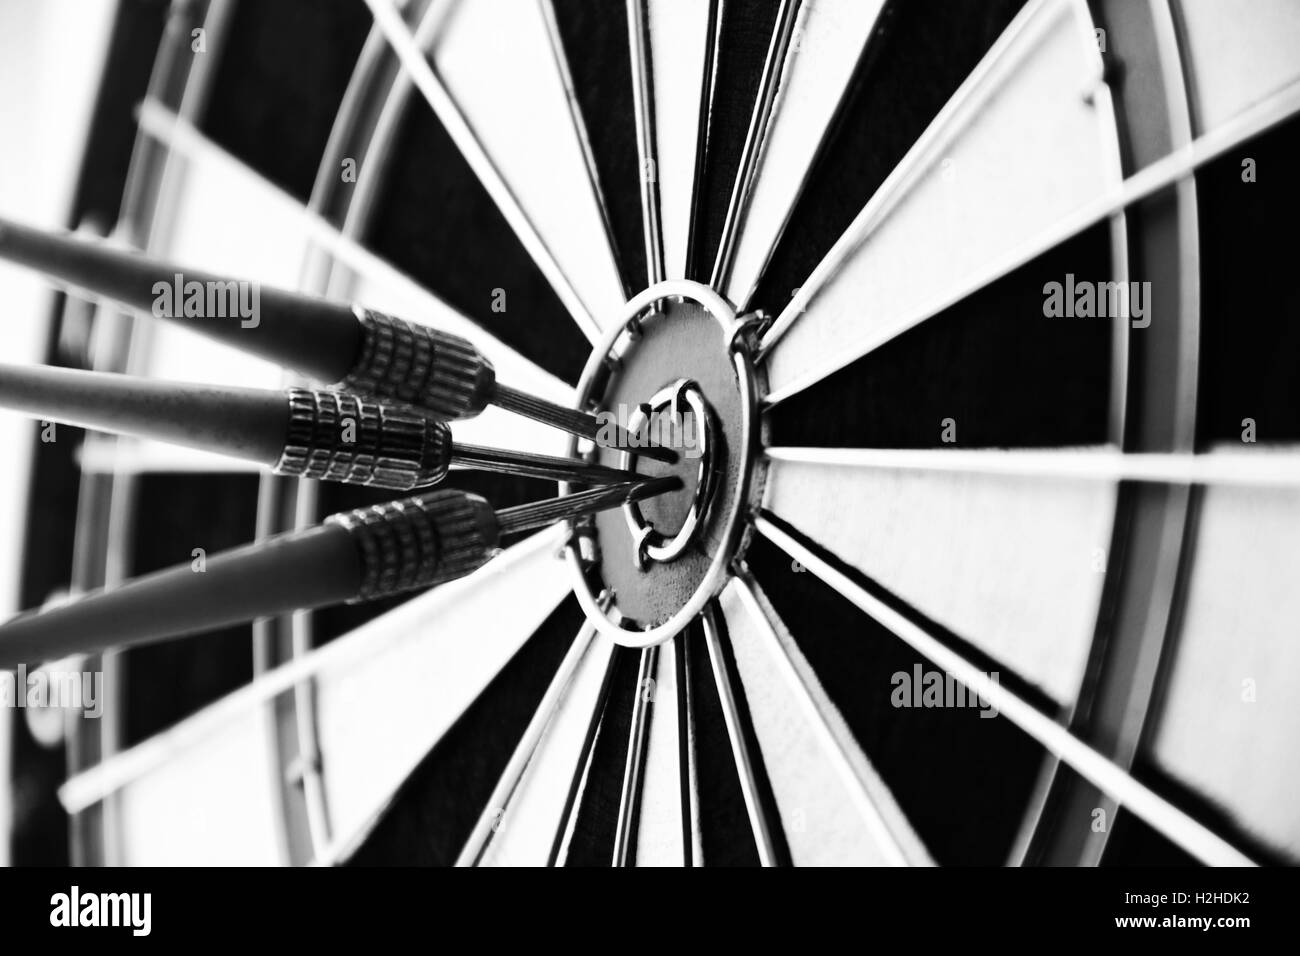 Darts bullseye target close up black and white Stock Photo